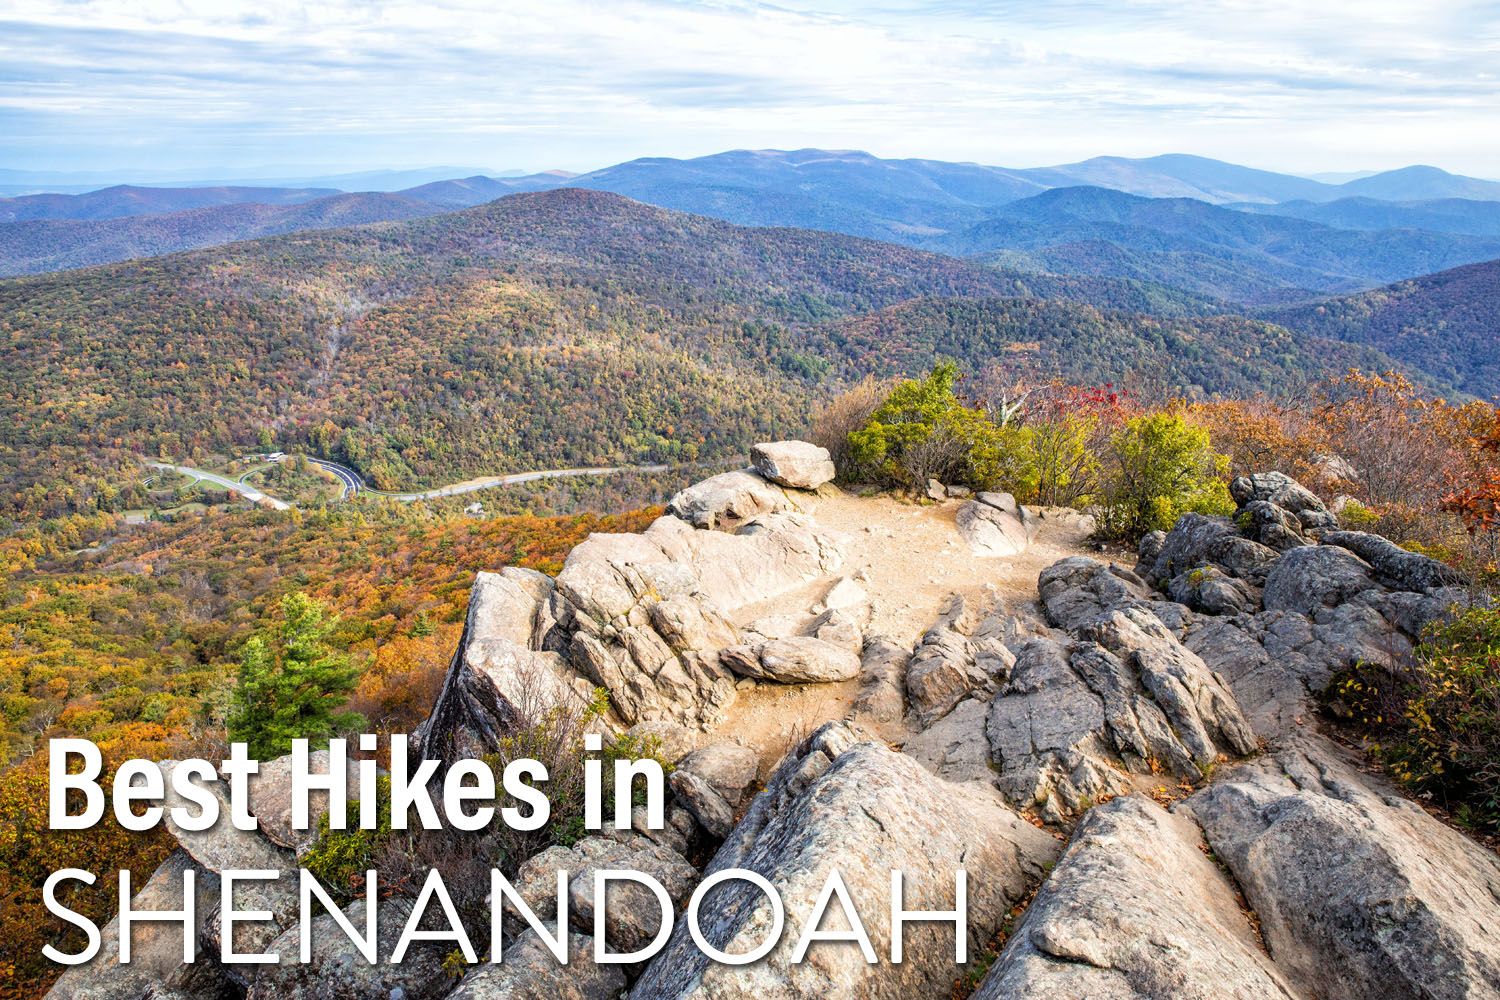 Hikes in Shenandoah